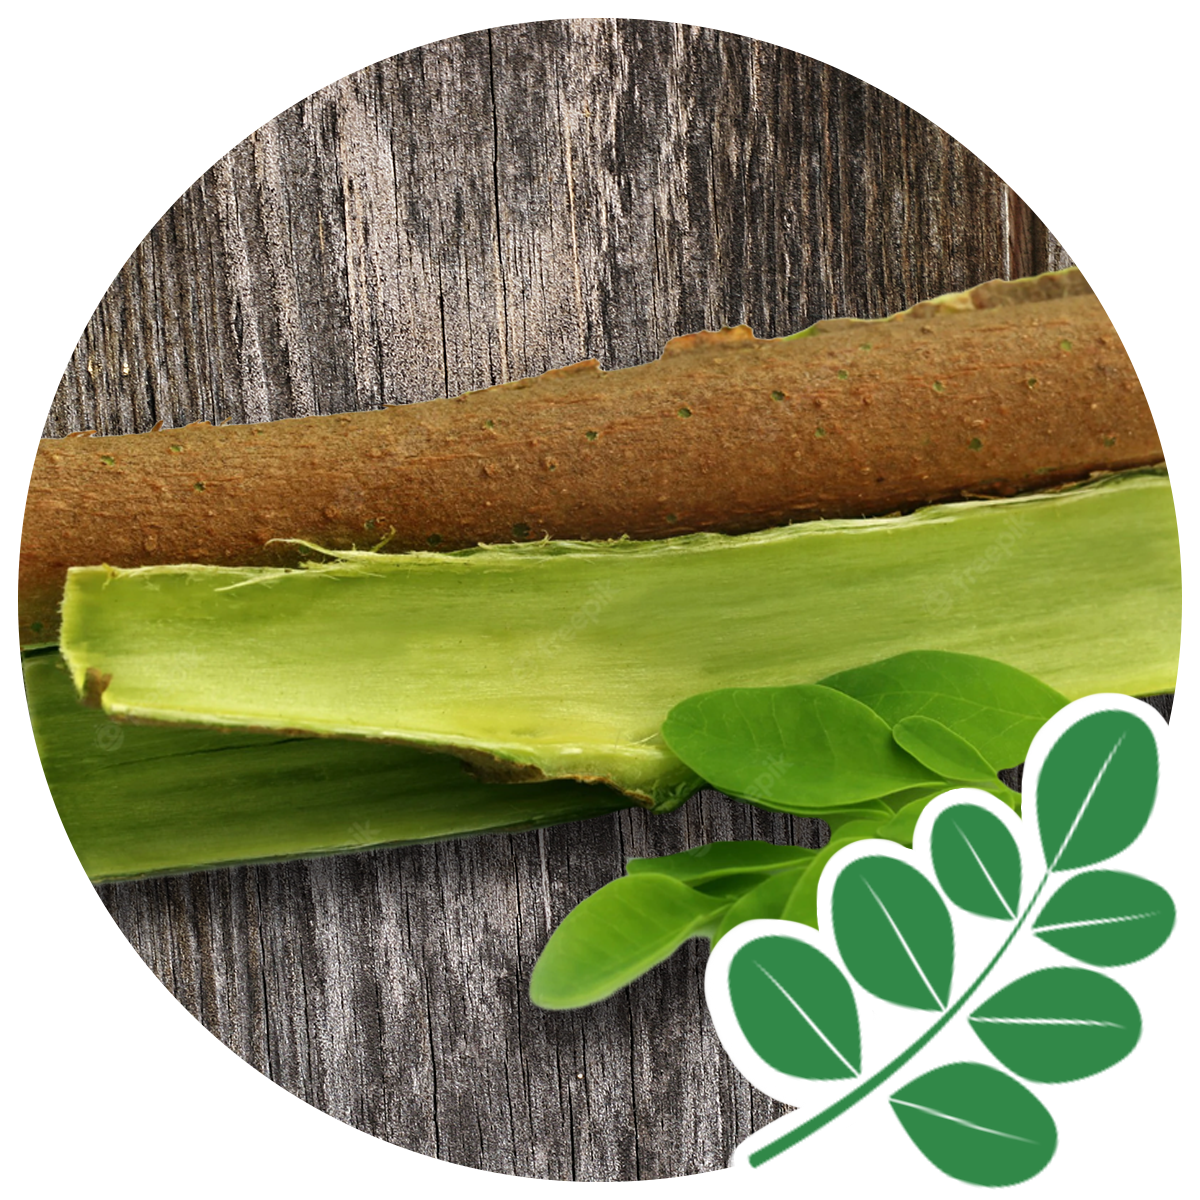 The bark of the moringa tree used to make the best moringa supplement